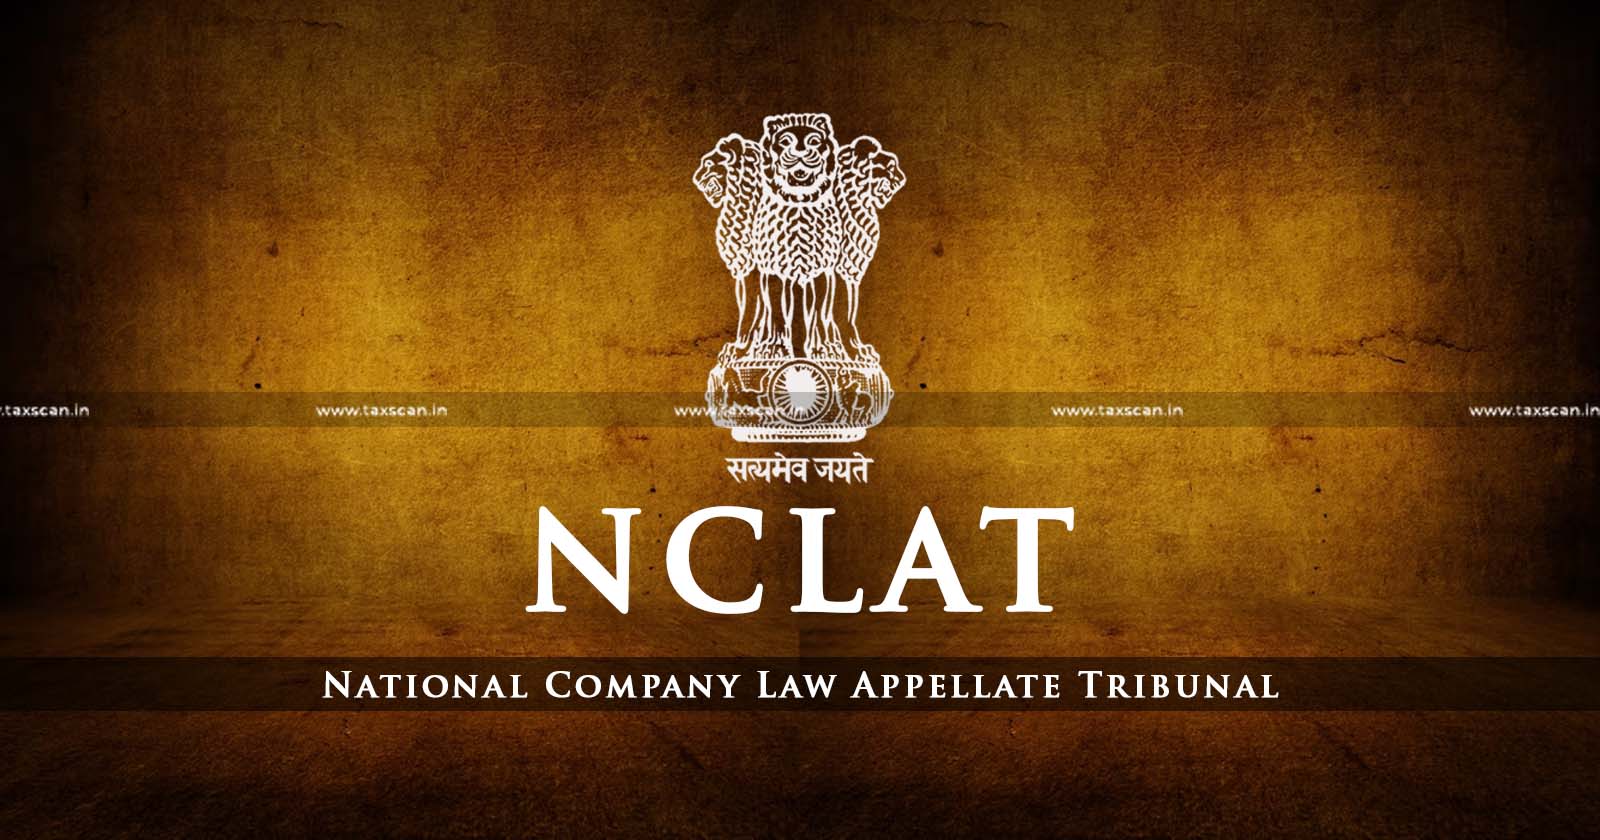 Company Struck off - Audited Financial Statement - Zero Revenue - NCLAT - NCLT Order - taxscan